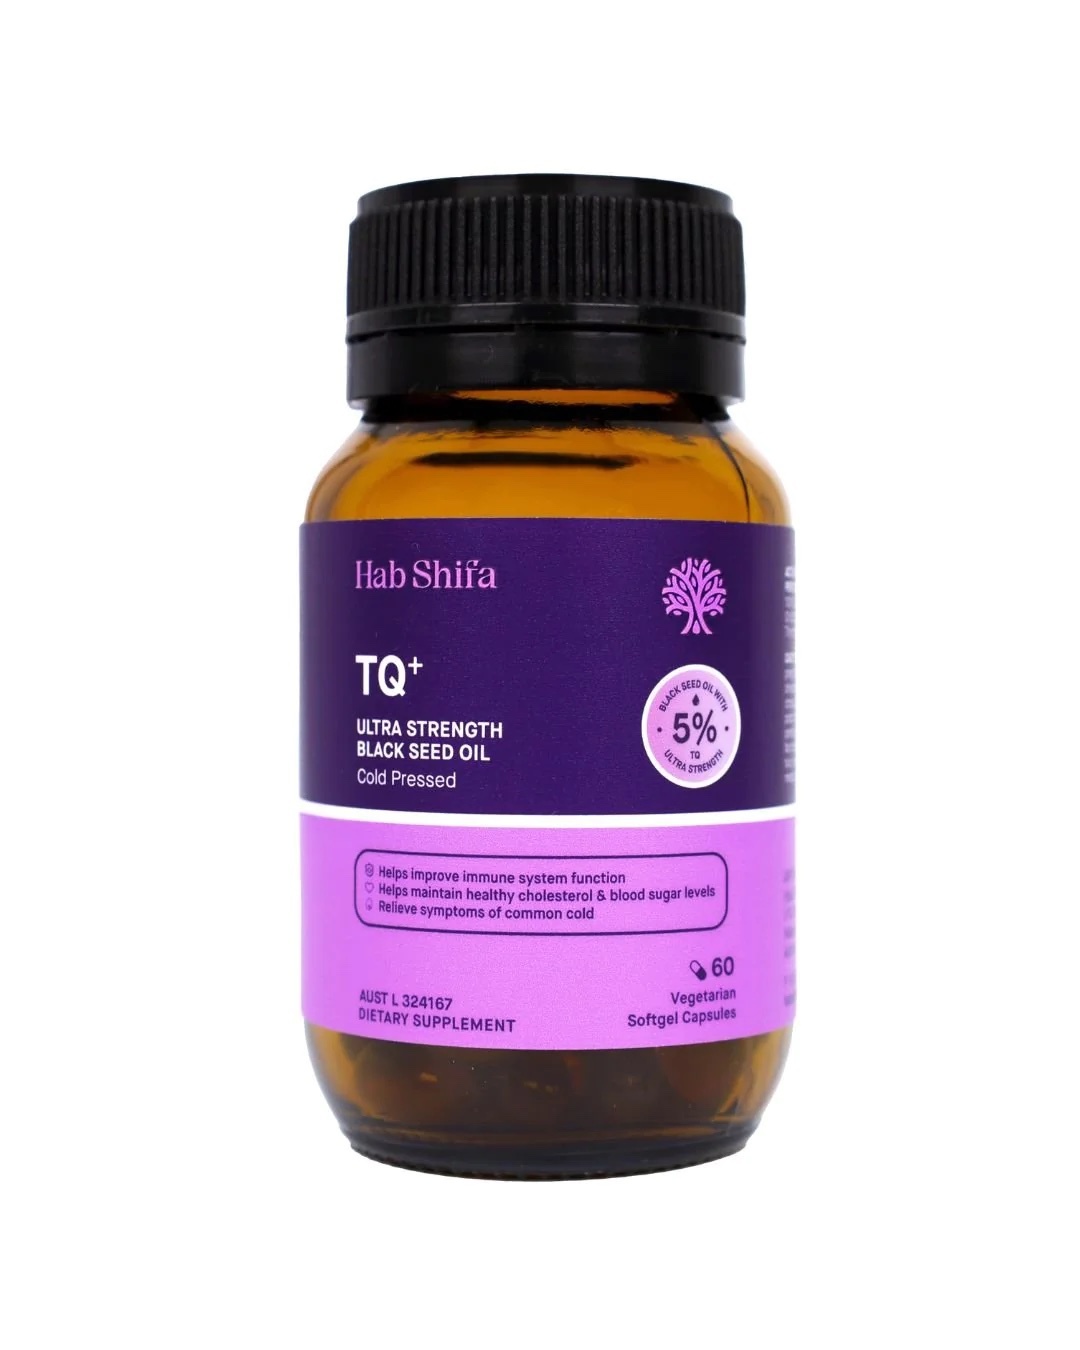 Hab Shifa - TQ+ Ultra Strength Black Seed Oil 60 Capsules